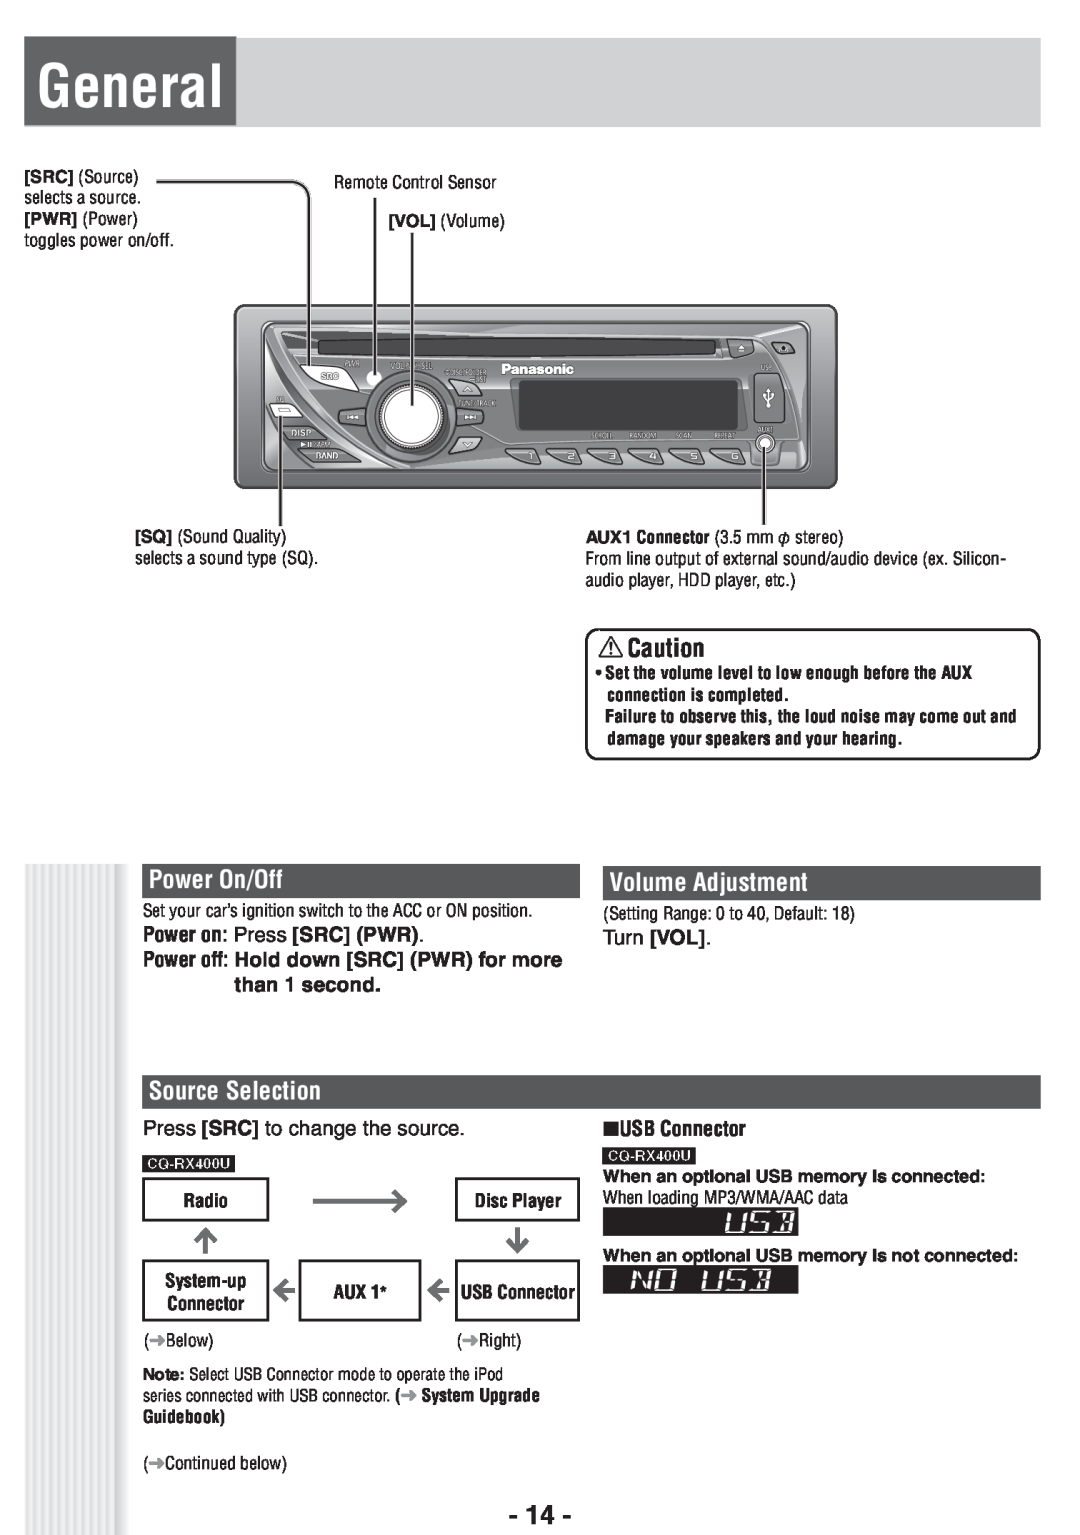 Panasonic CQ-RX400U General, Power On/Off, Volume Adjustment, Source Selection, Power on Press SRC PWR, Turn VOL, Radio 